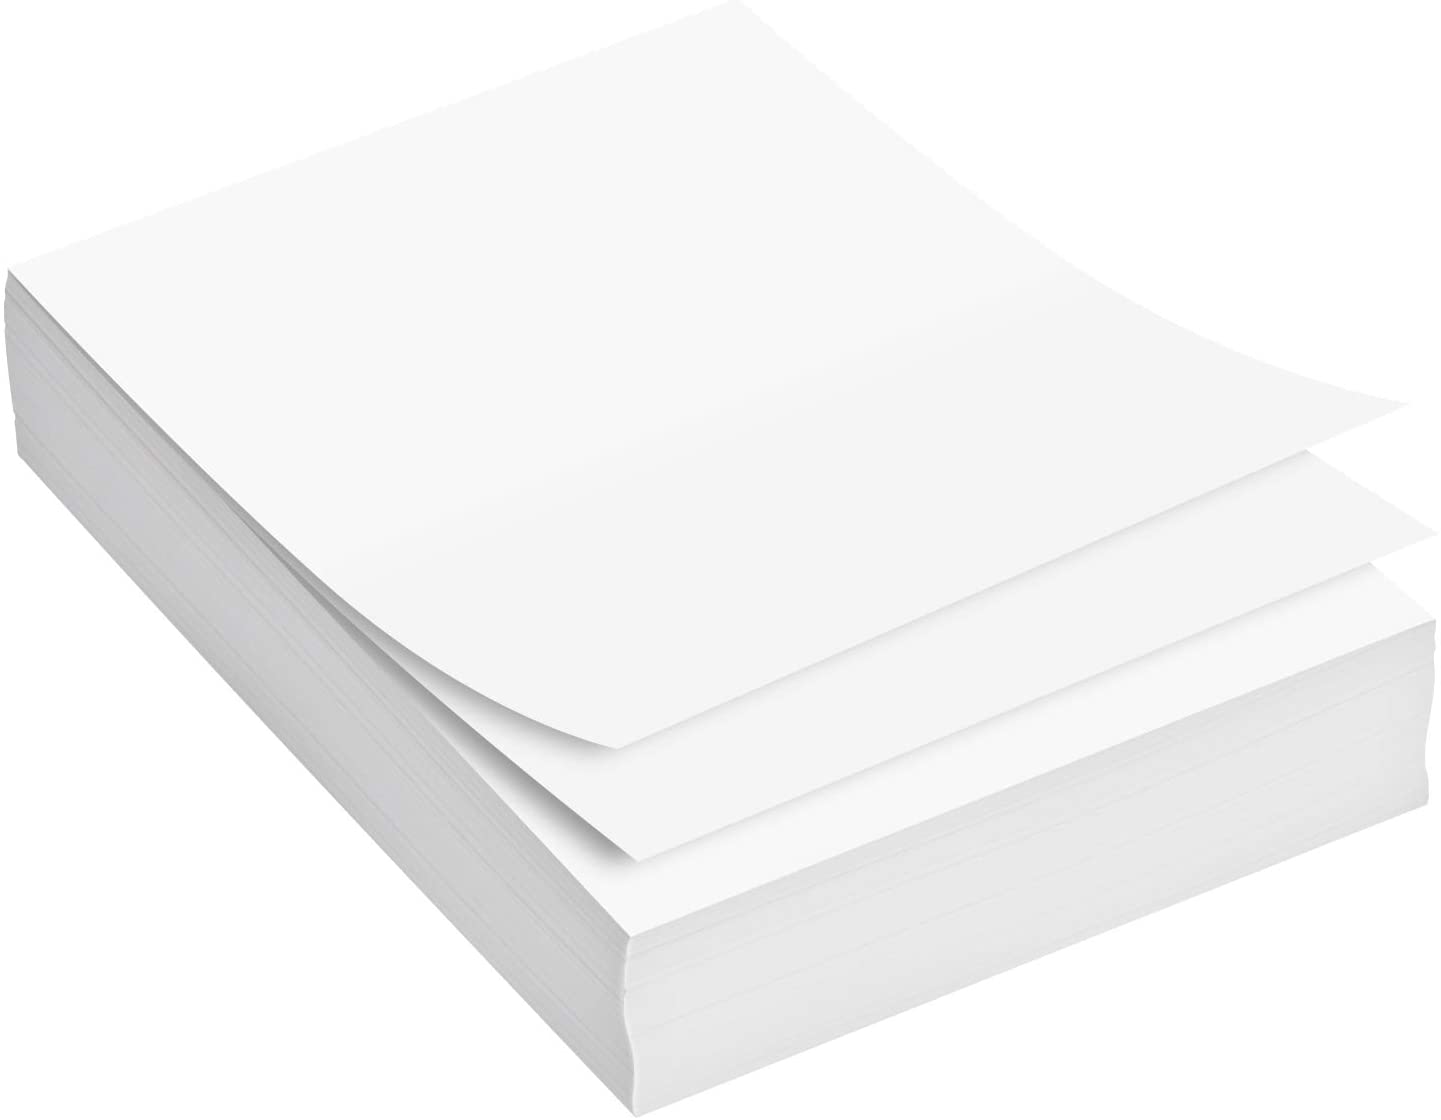 A4 Premium Bright White Paper – Great for Copy, Printing, Writing | 210 x  297 mm (8.27 x 11.69) | 24lb Bond / 60lb Text (90gsm) | 100 Sheets per